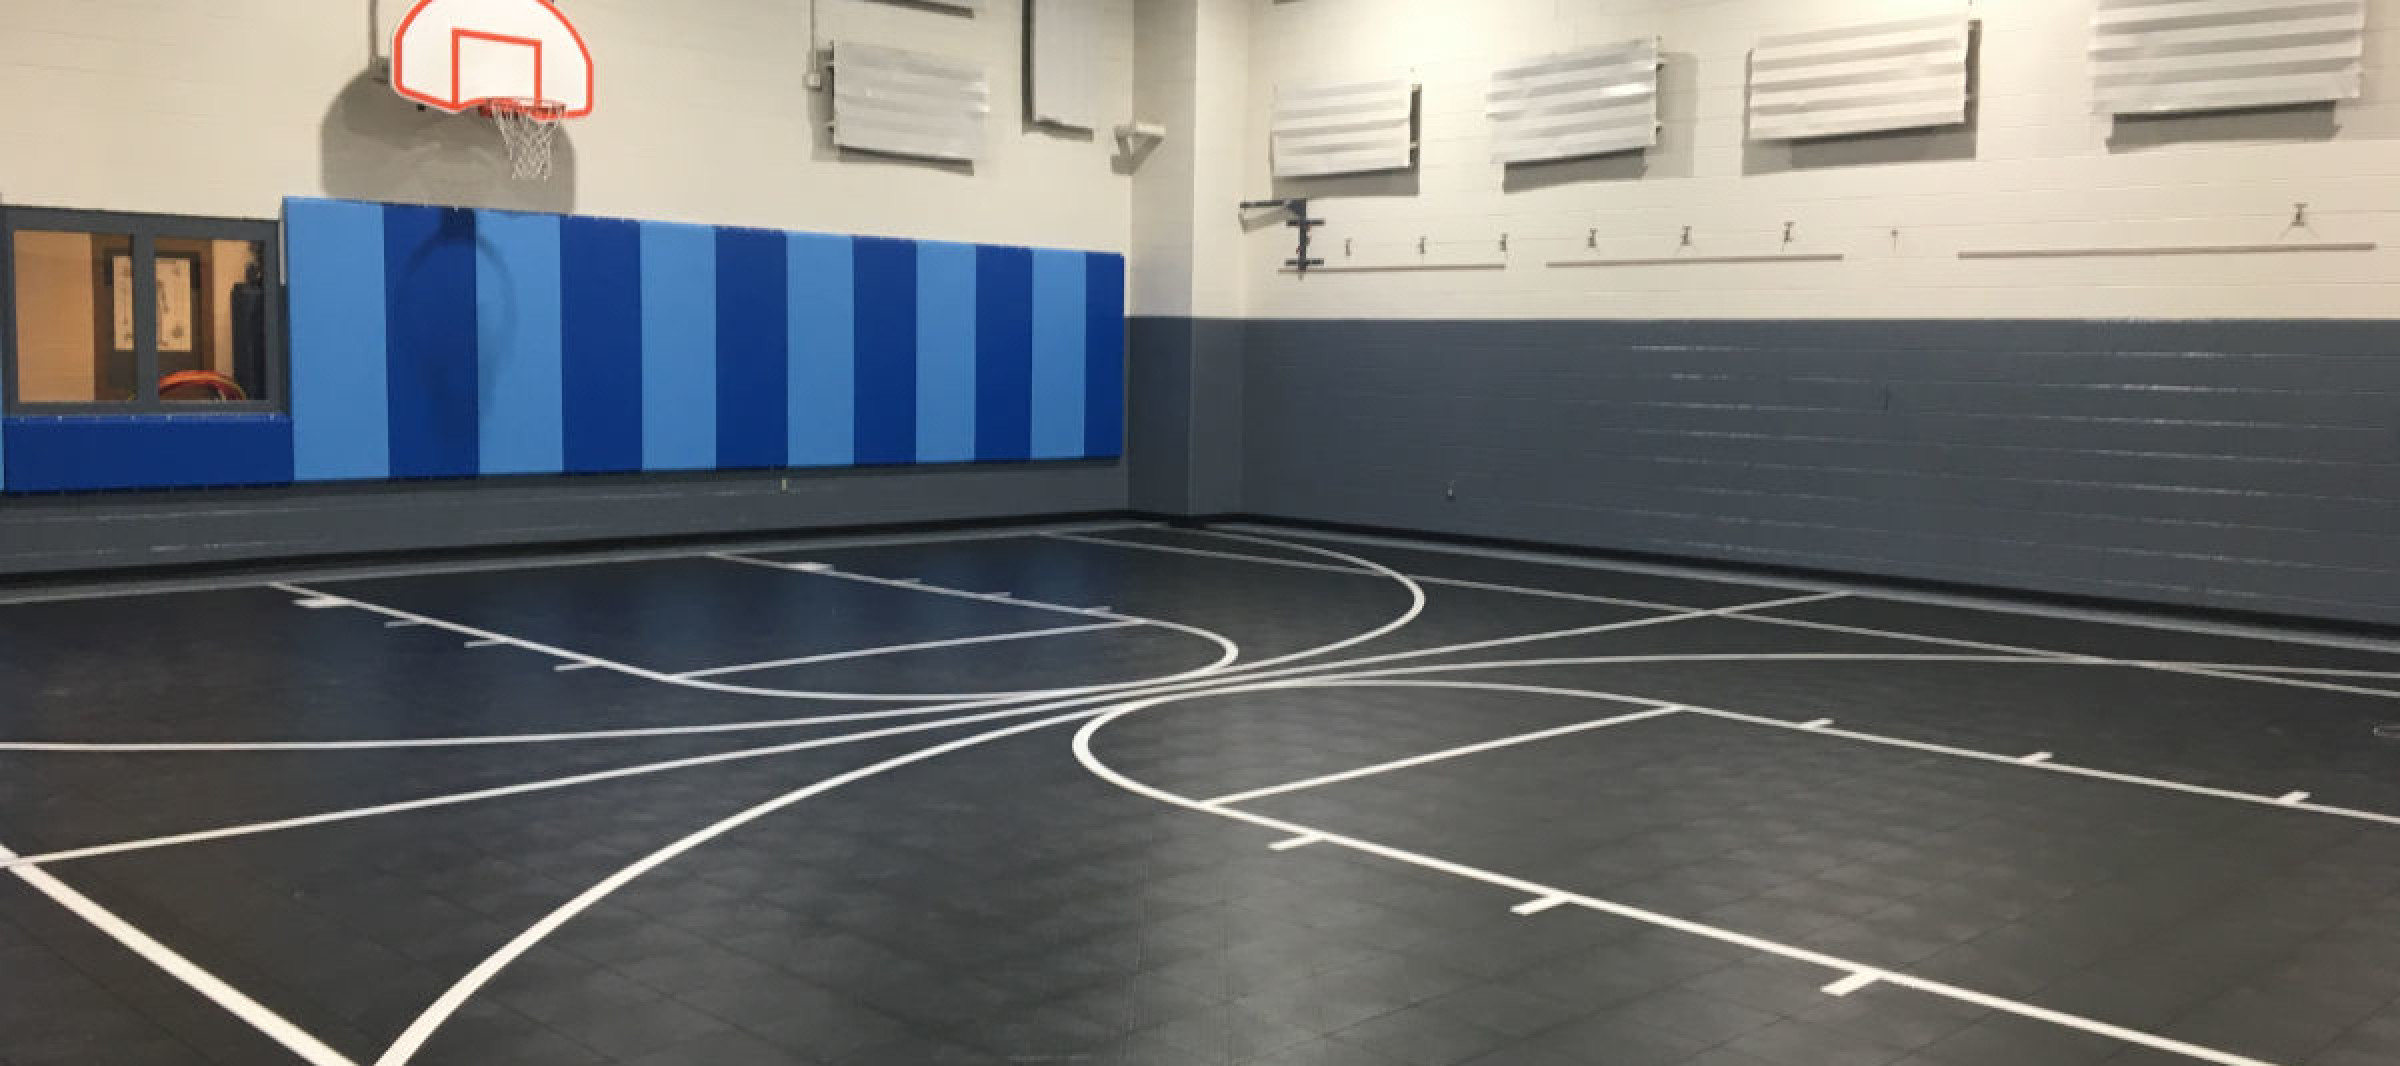 basketball court floor clipart